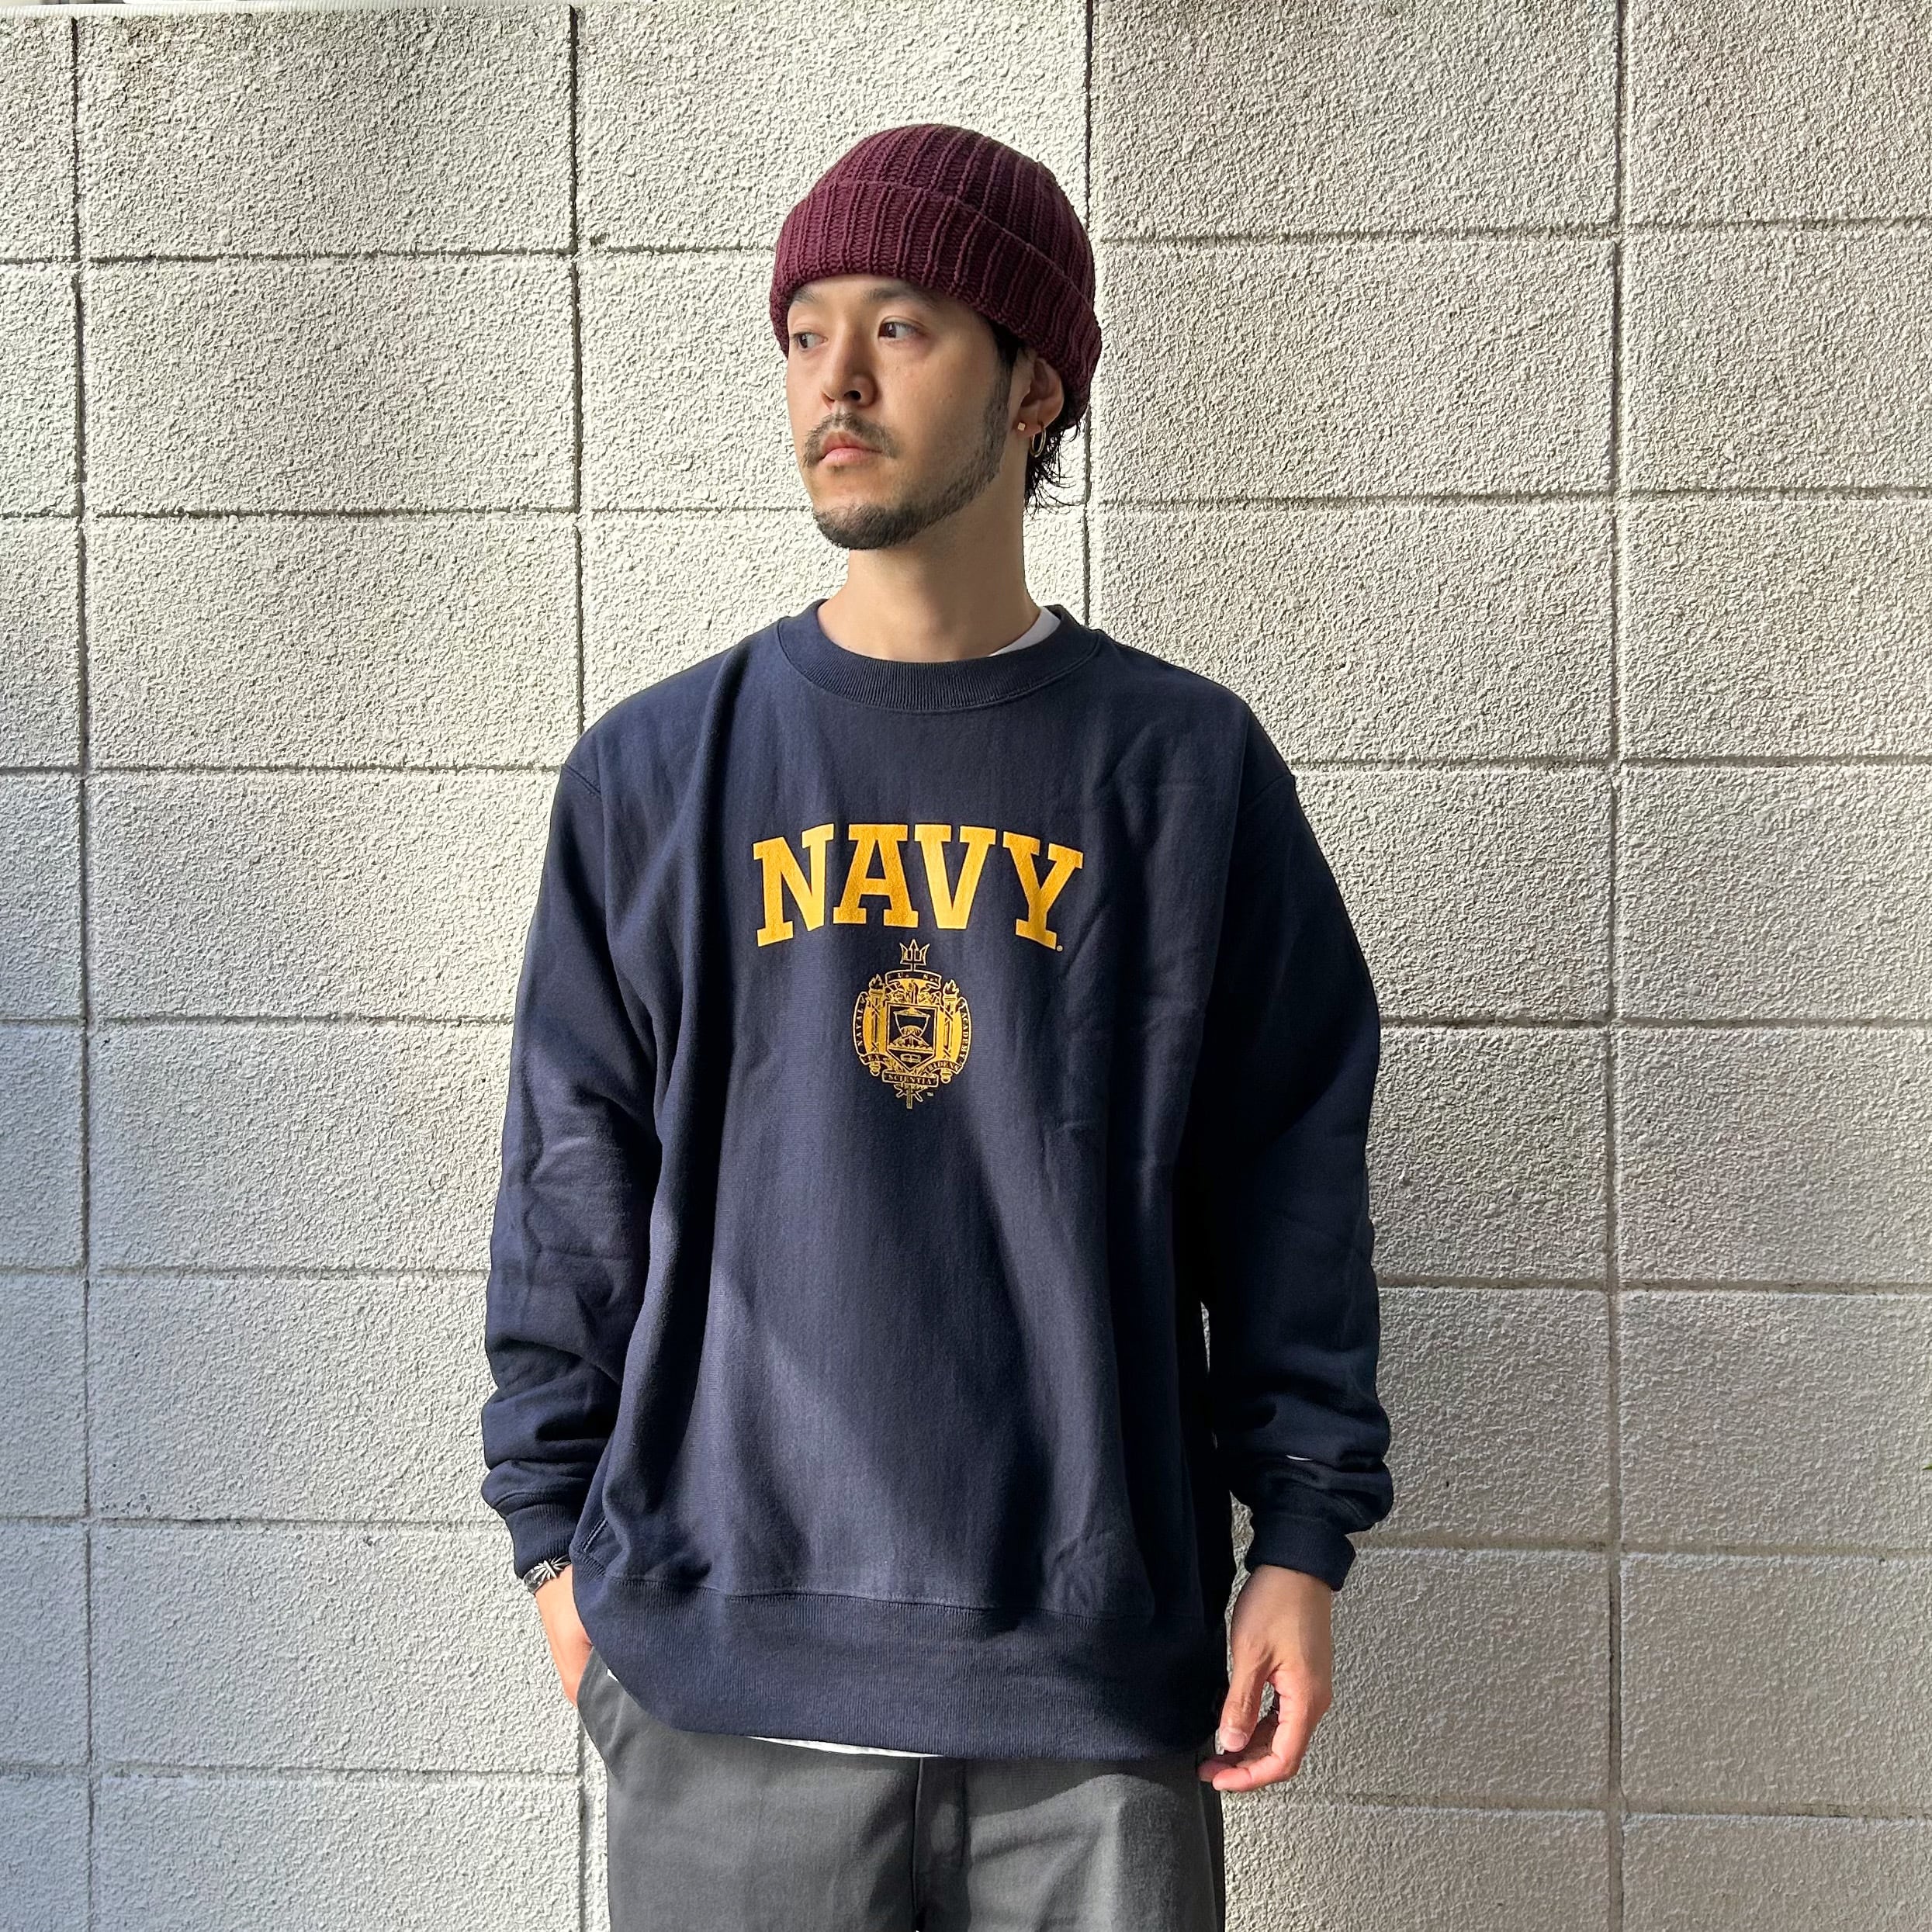 US NAVY Naval Academy 90年代 リバースウィーブパーカー